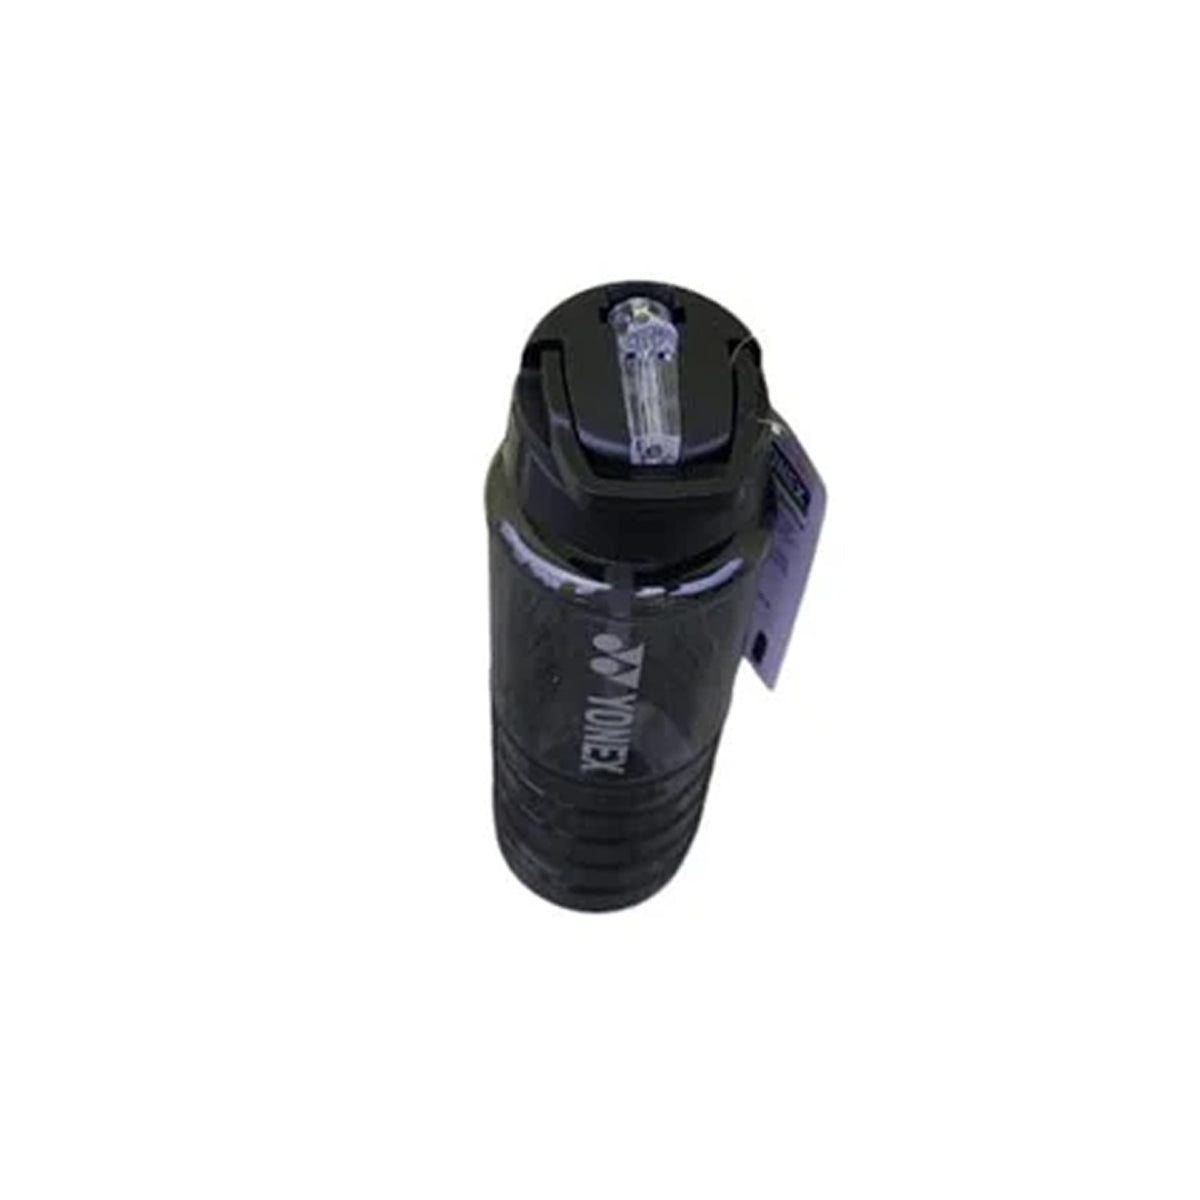 Yonex Tritan 700ml Water Bottle - Best Price online Prokicksports.com